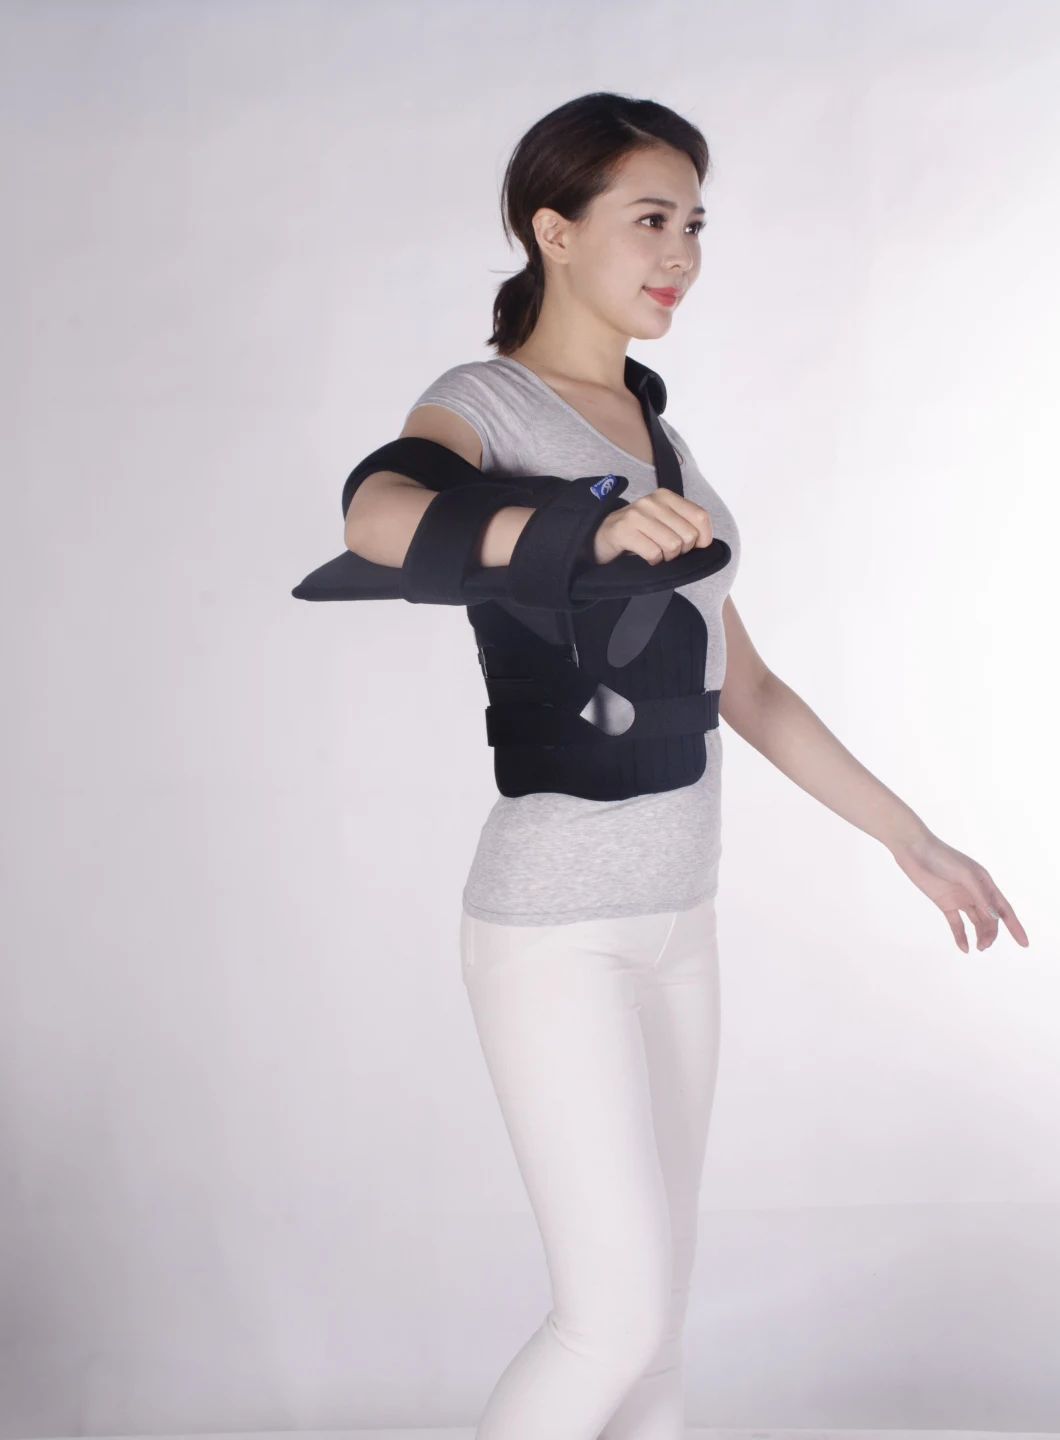 Medical Arm Sling Arm Brace Arm Support Breathable Mesh Shoulder Immobilizer with Splint Strap